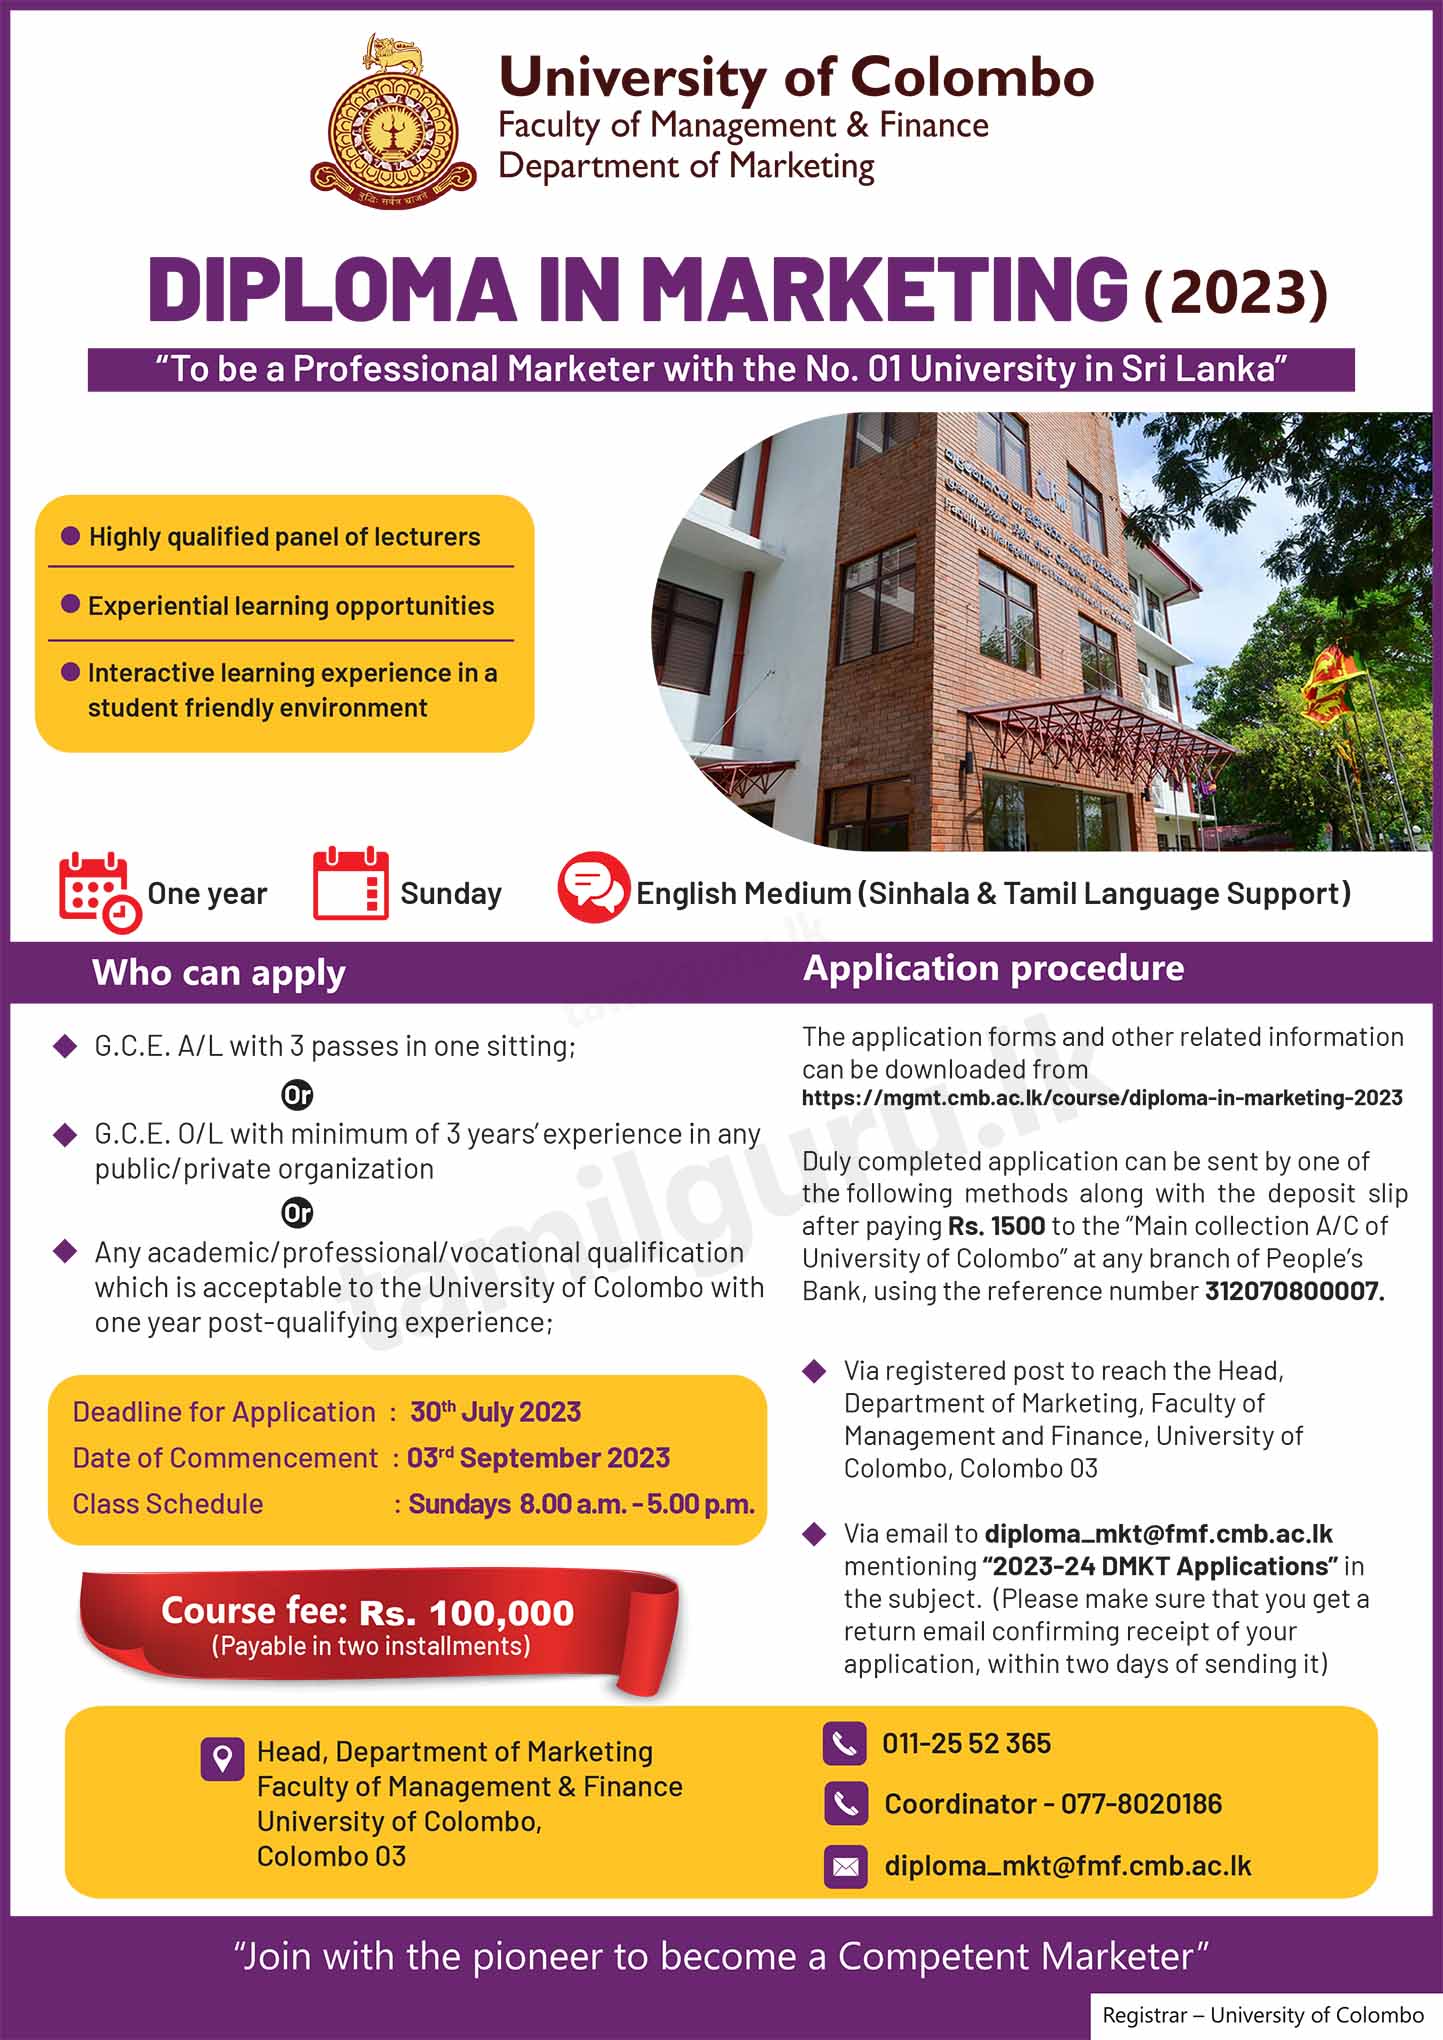 Diploma in Marketing 2023 - University of Colombo